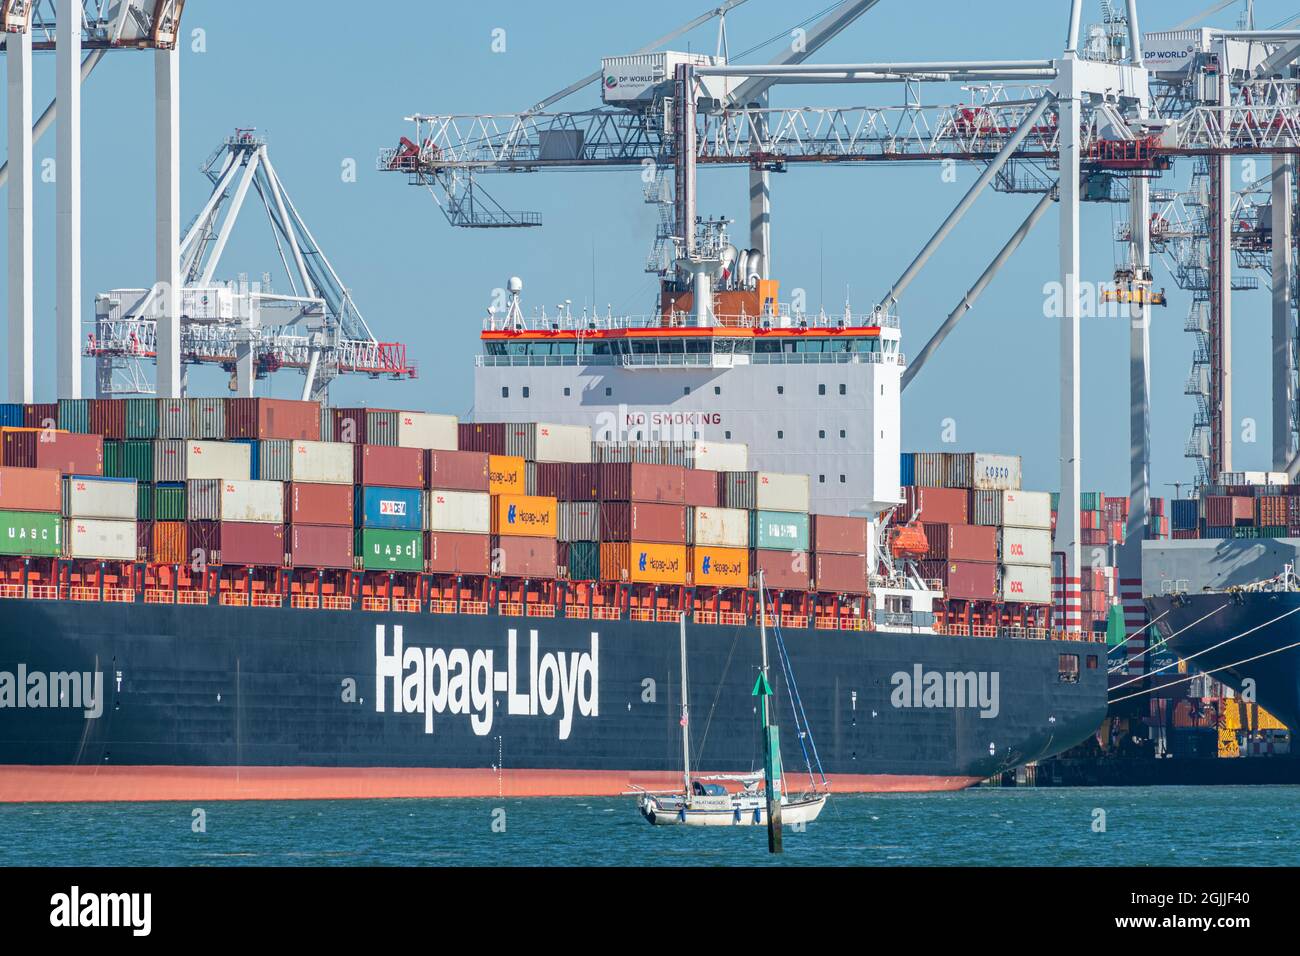 Hapag docks -Fotos und -Bildmaterial in hoher Auflösung – Alamy